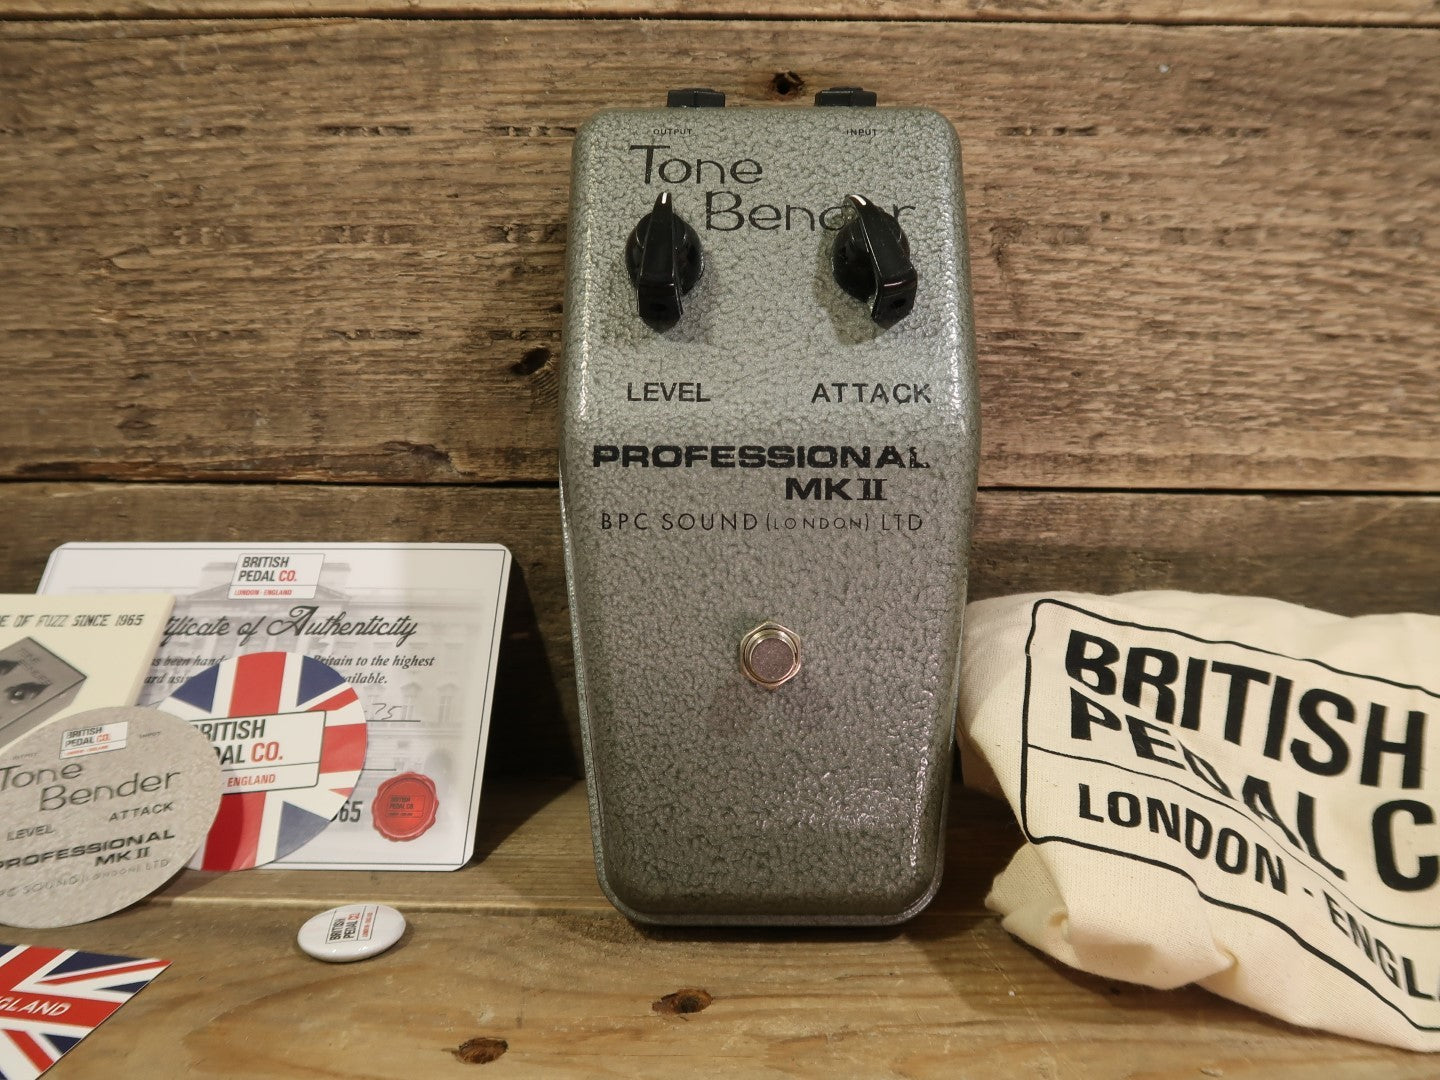 British Pedal Company BPC Professional MKII Tone Bender OC75 Germanium Fuzz (Vintage Series, Tonebender)